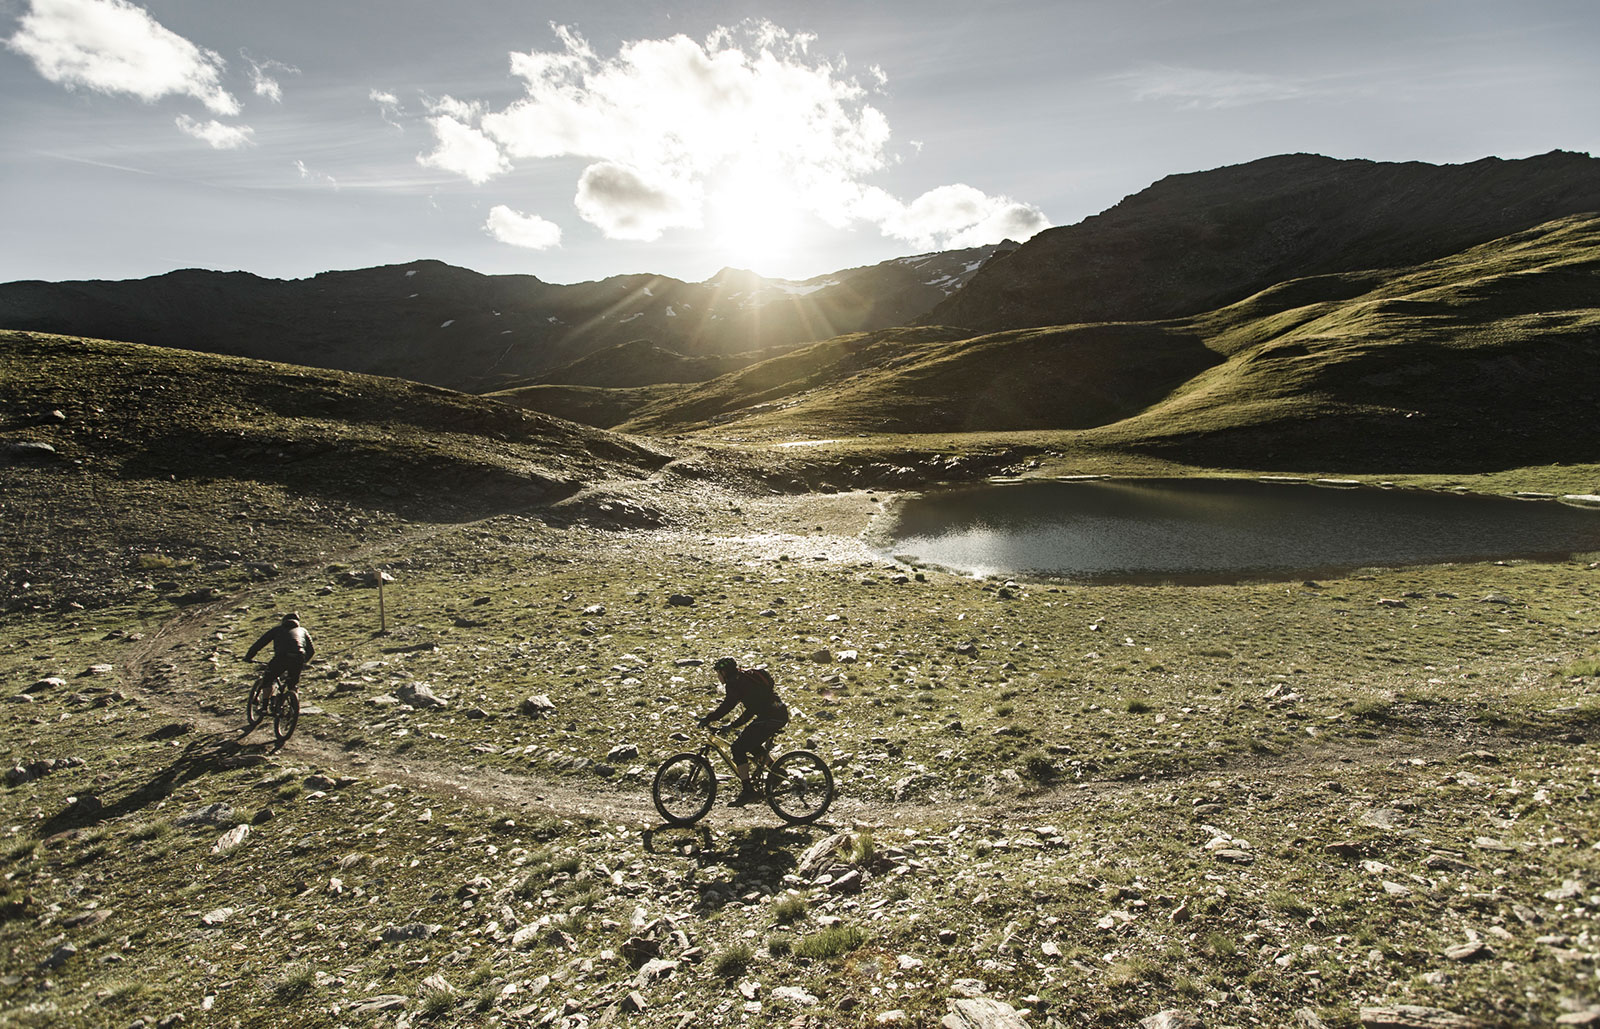 Two cyclists on a path next to a mountain lake